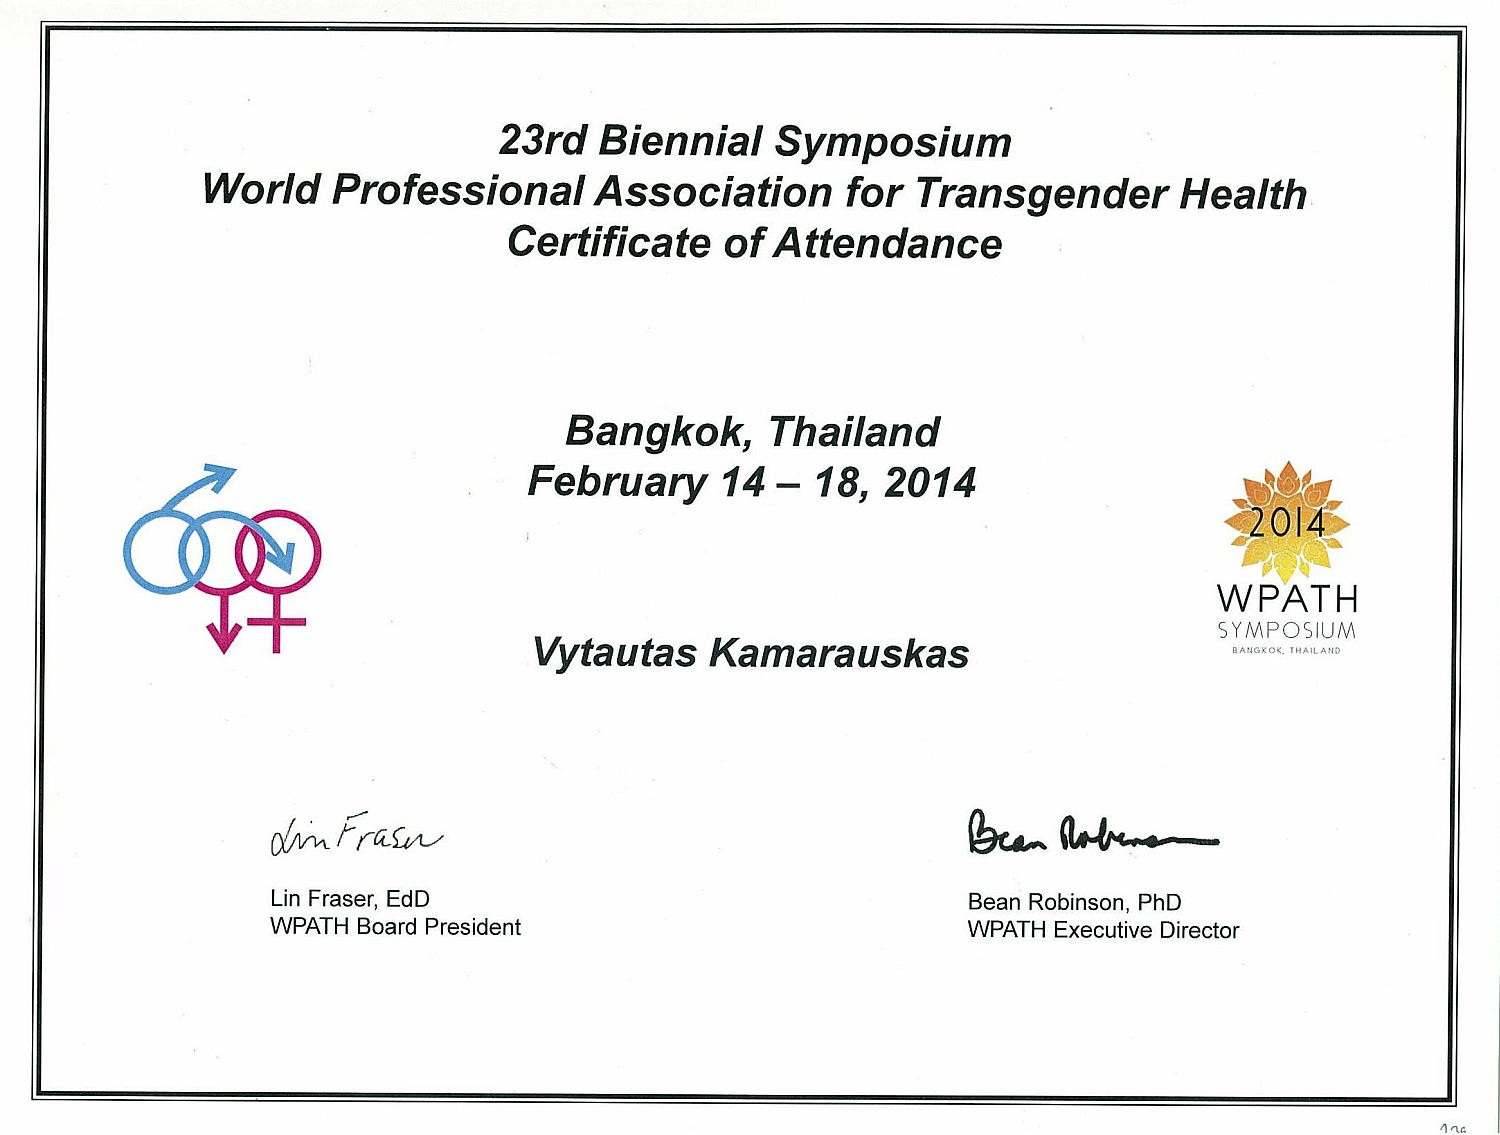 23rd Biennial Symposium of World Professional Association for Transgender Health in Bangkok, Thailand February 14-18, 2014